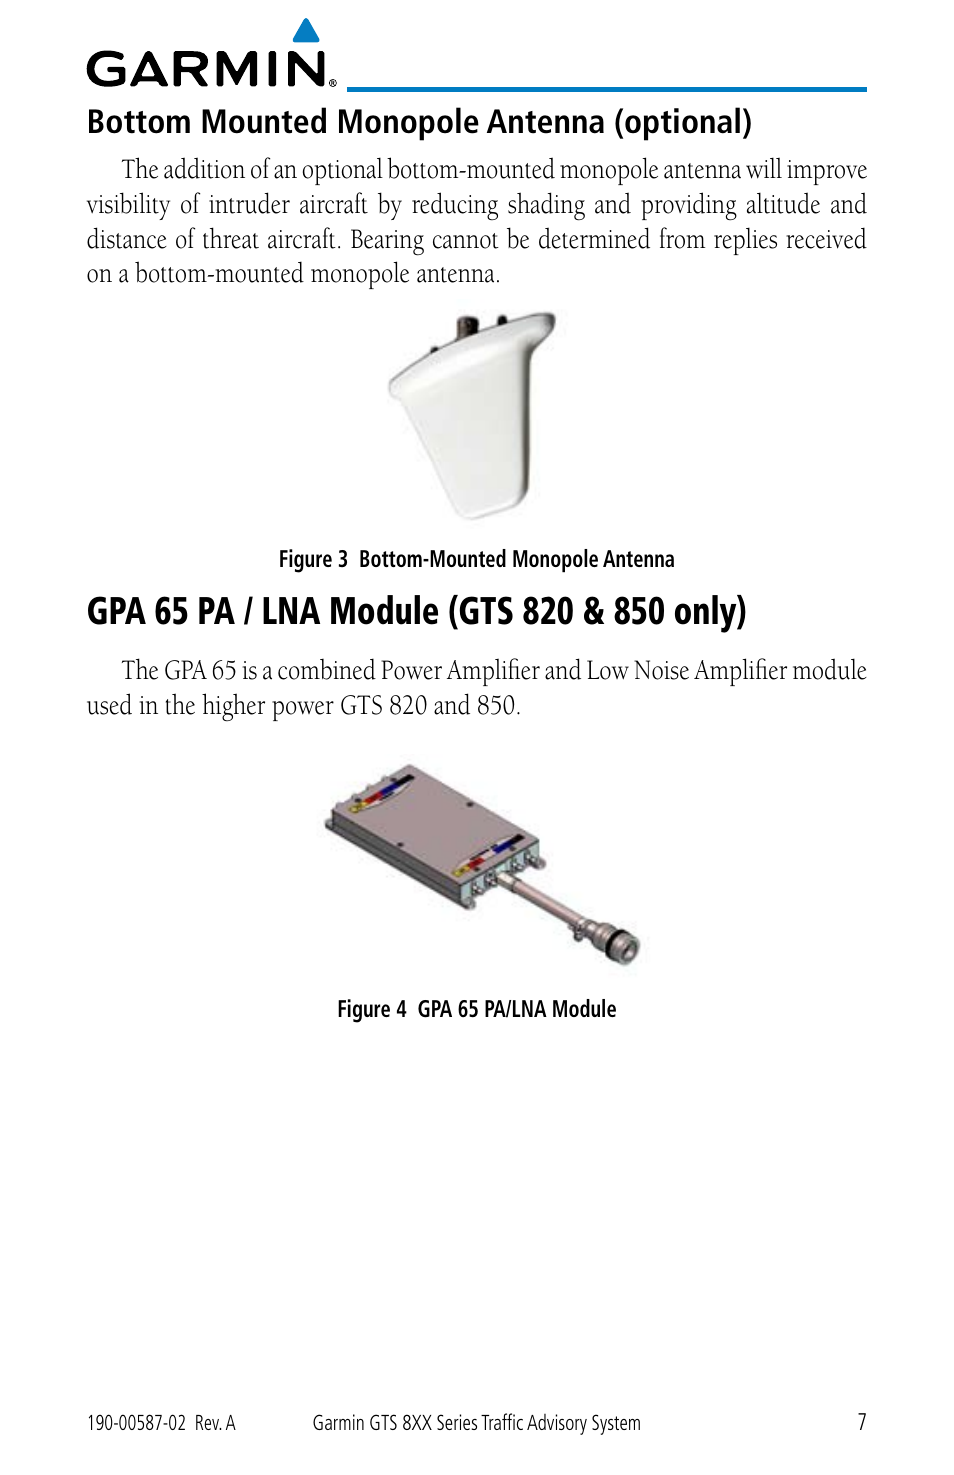 Bottom mounted monopole antenna (optional), Gpa 65 pa / lna module (gts 820  & 850 only) | Garmin GTS 855 User Manual | Page 11 / 26